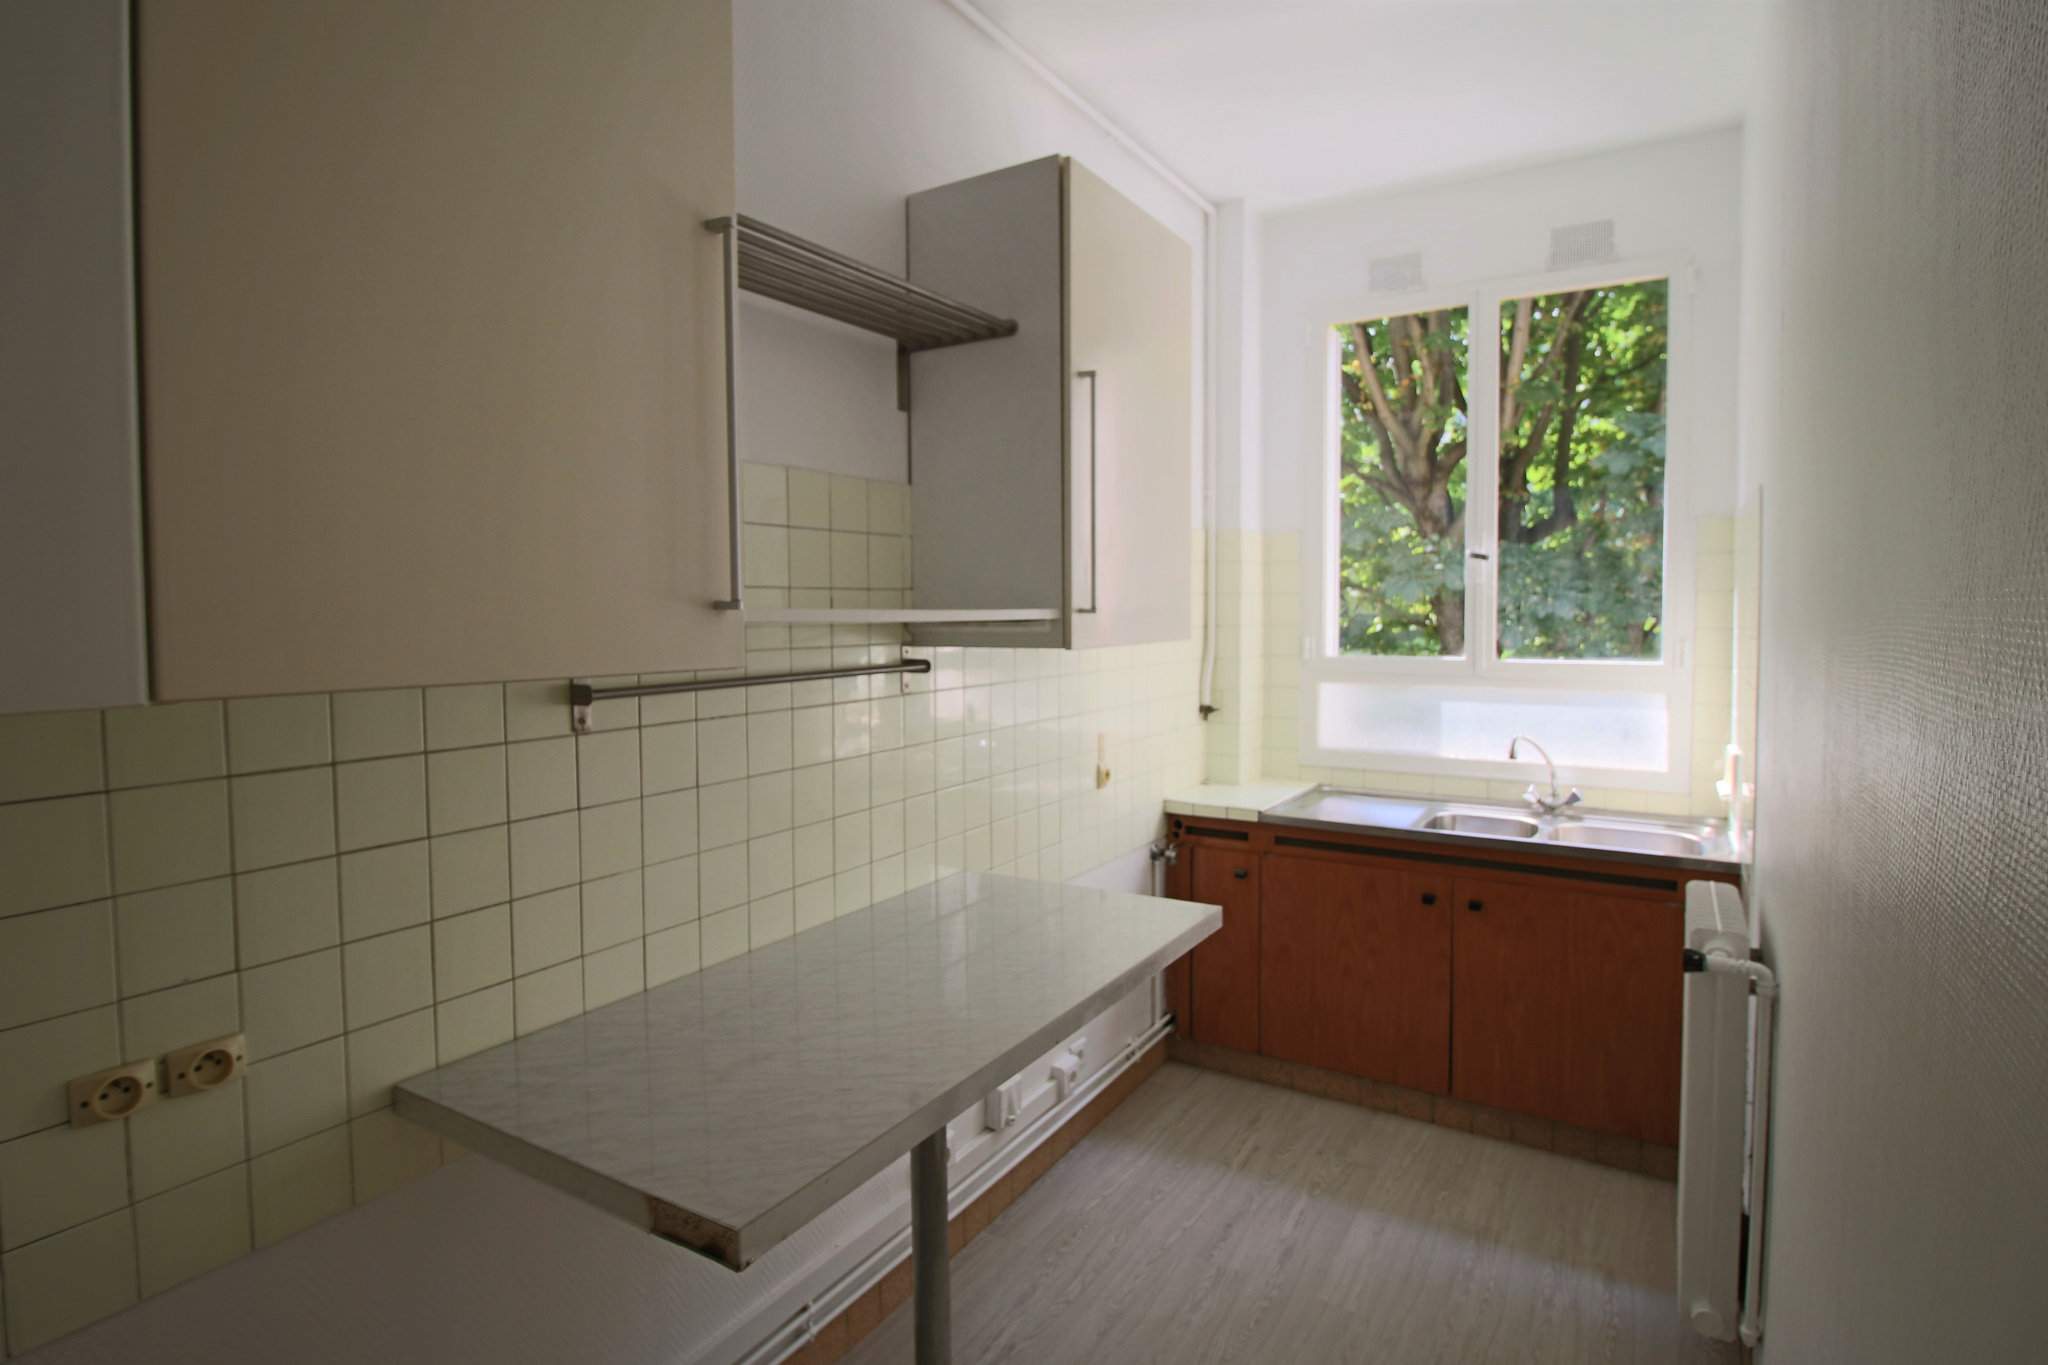 Appartement a louer neuilly-sur-seine - 1 pièce(s) - 35.82 m2 - Surfyn